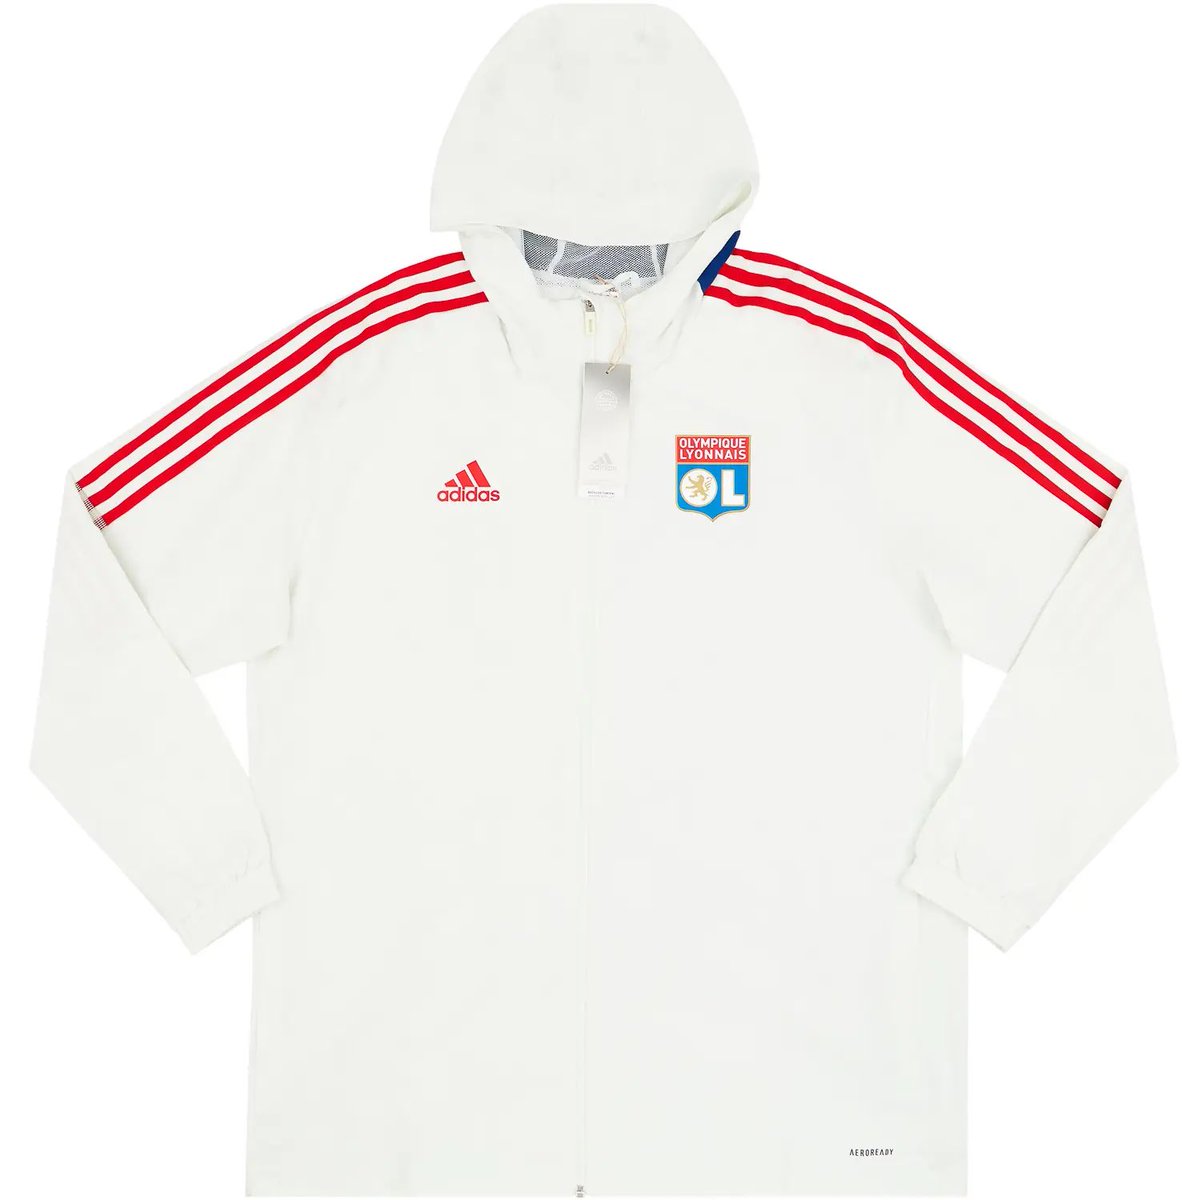 🇫🇷 CFS DEAL 🇫🇷 Lyon 21/22 Presentation Jacket Size XL £16.20 with code KITSMAN10 #ad #ol 👉 classicfootballshirts.co.uk/2021-22-lyon-a…